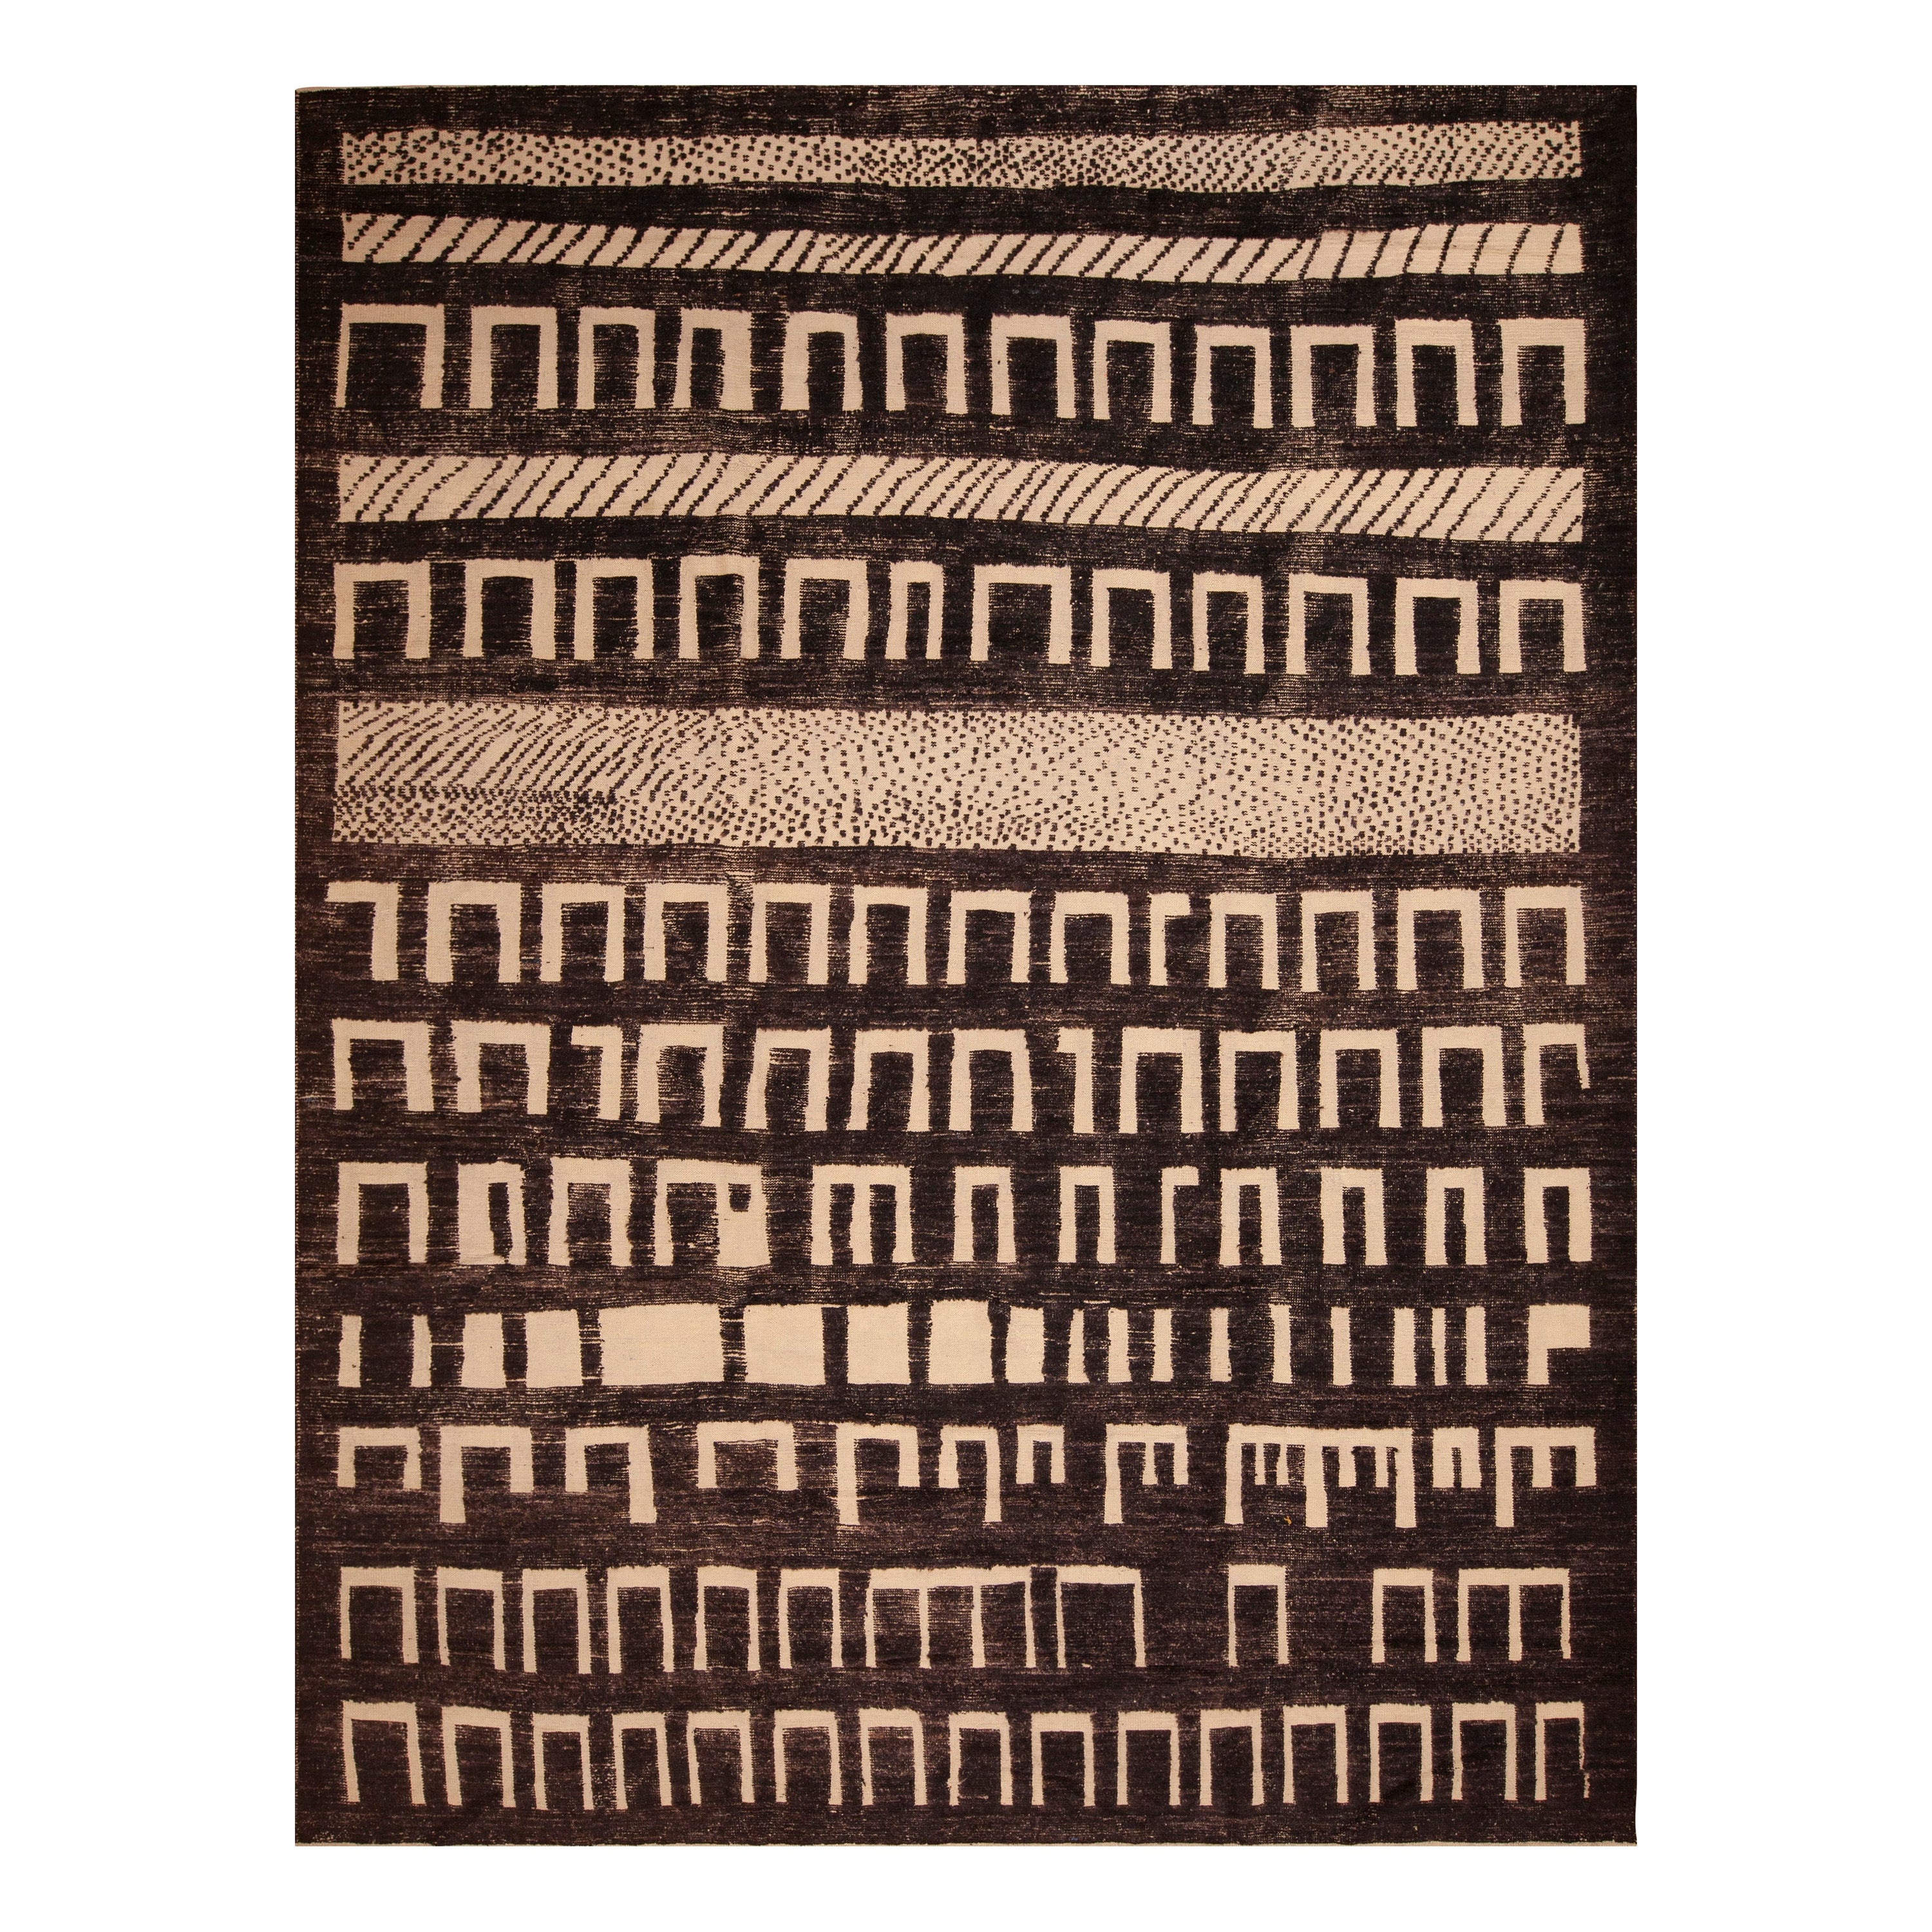 Collection Nazmiyal Graphic Tribal Primitive Geometric Modern Rug 10'3" x 13'8"